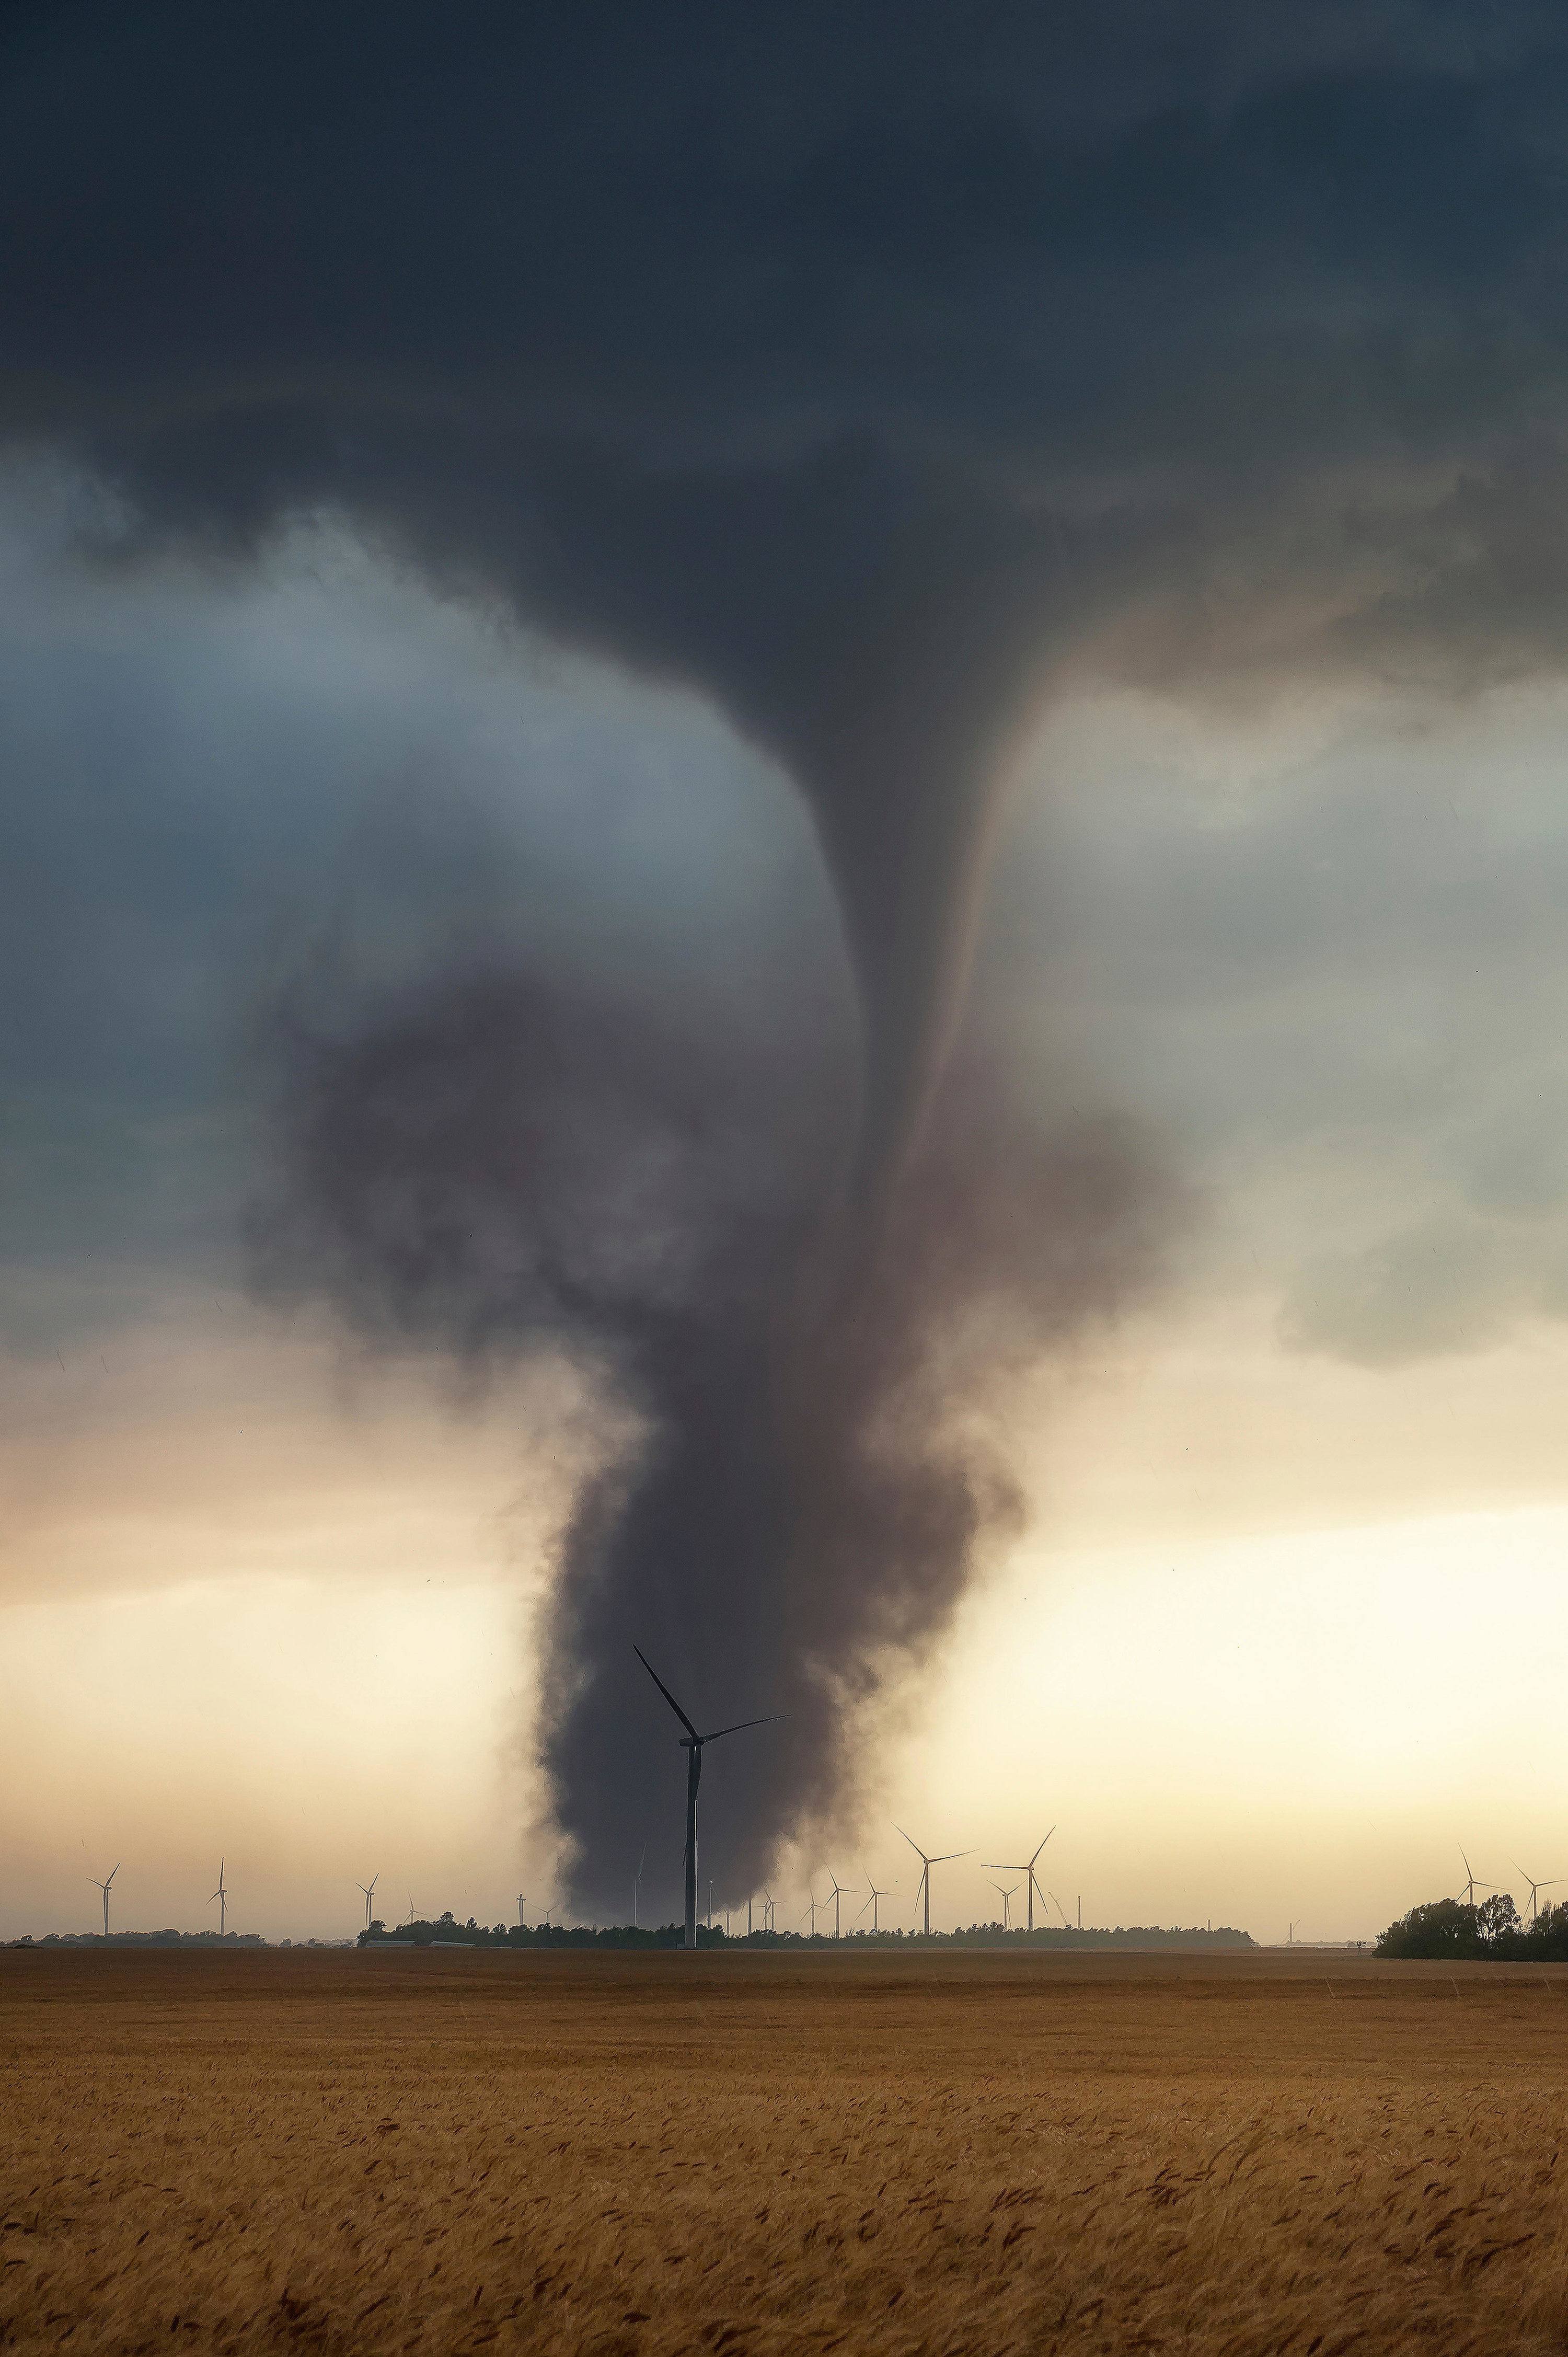 A tornado over a wind turbine